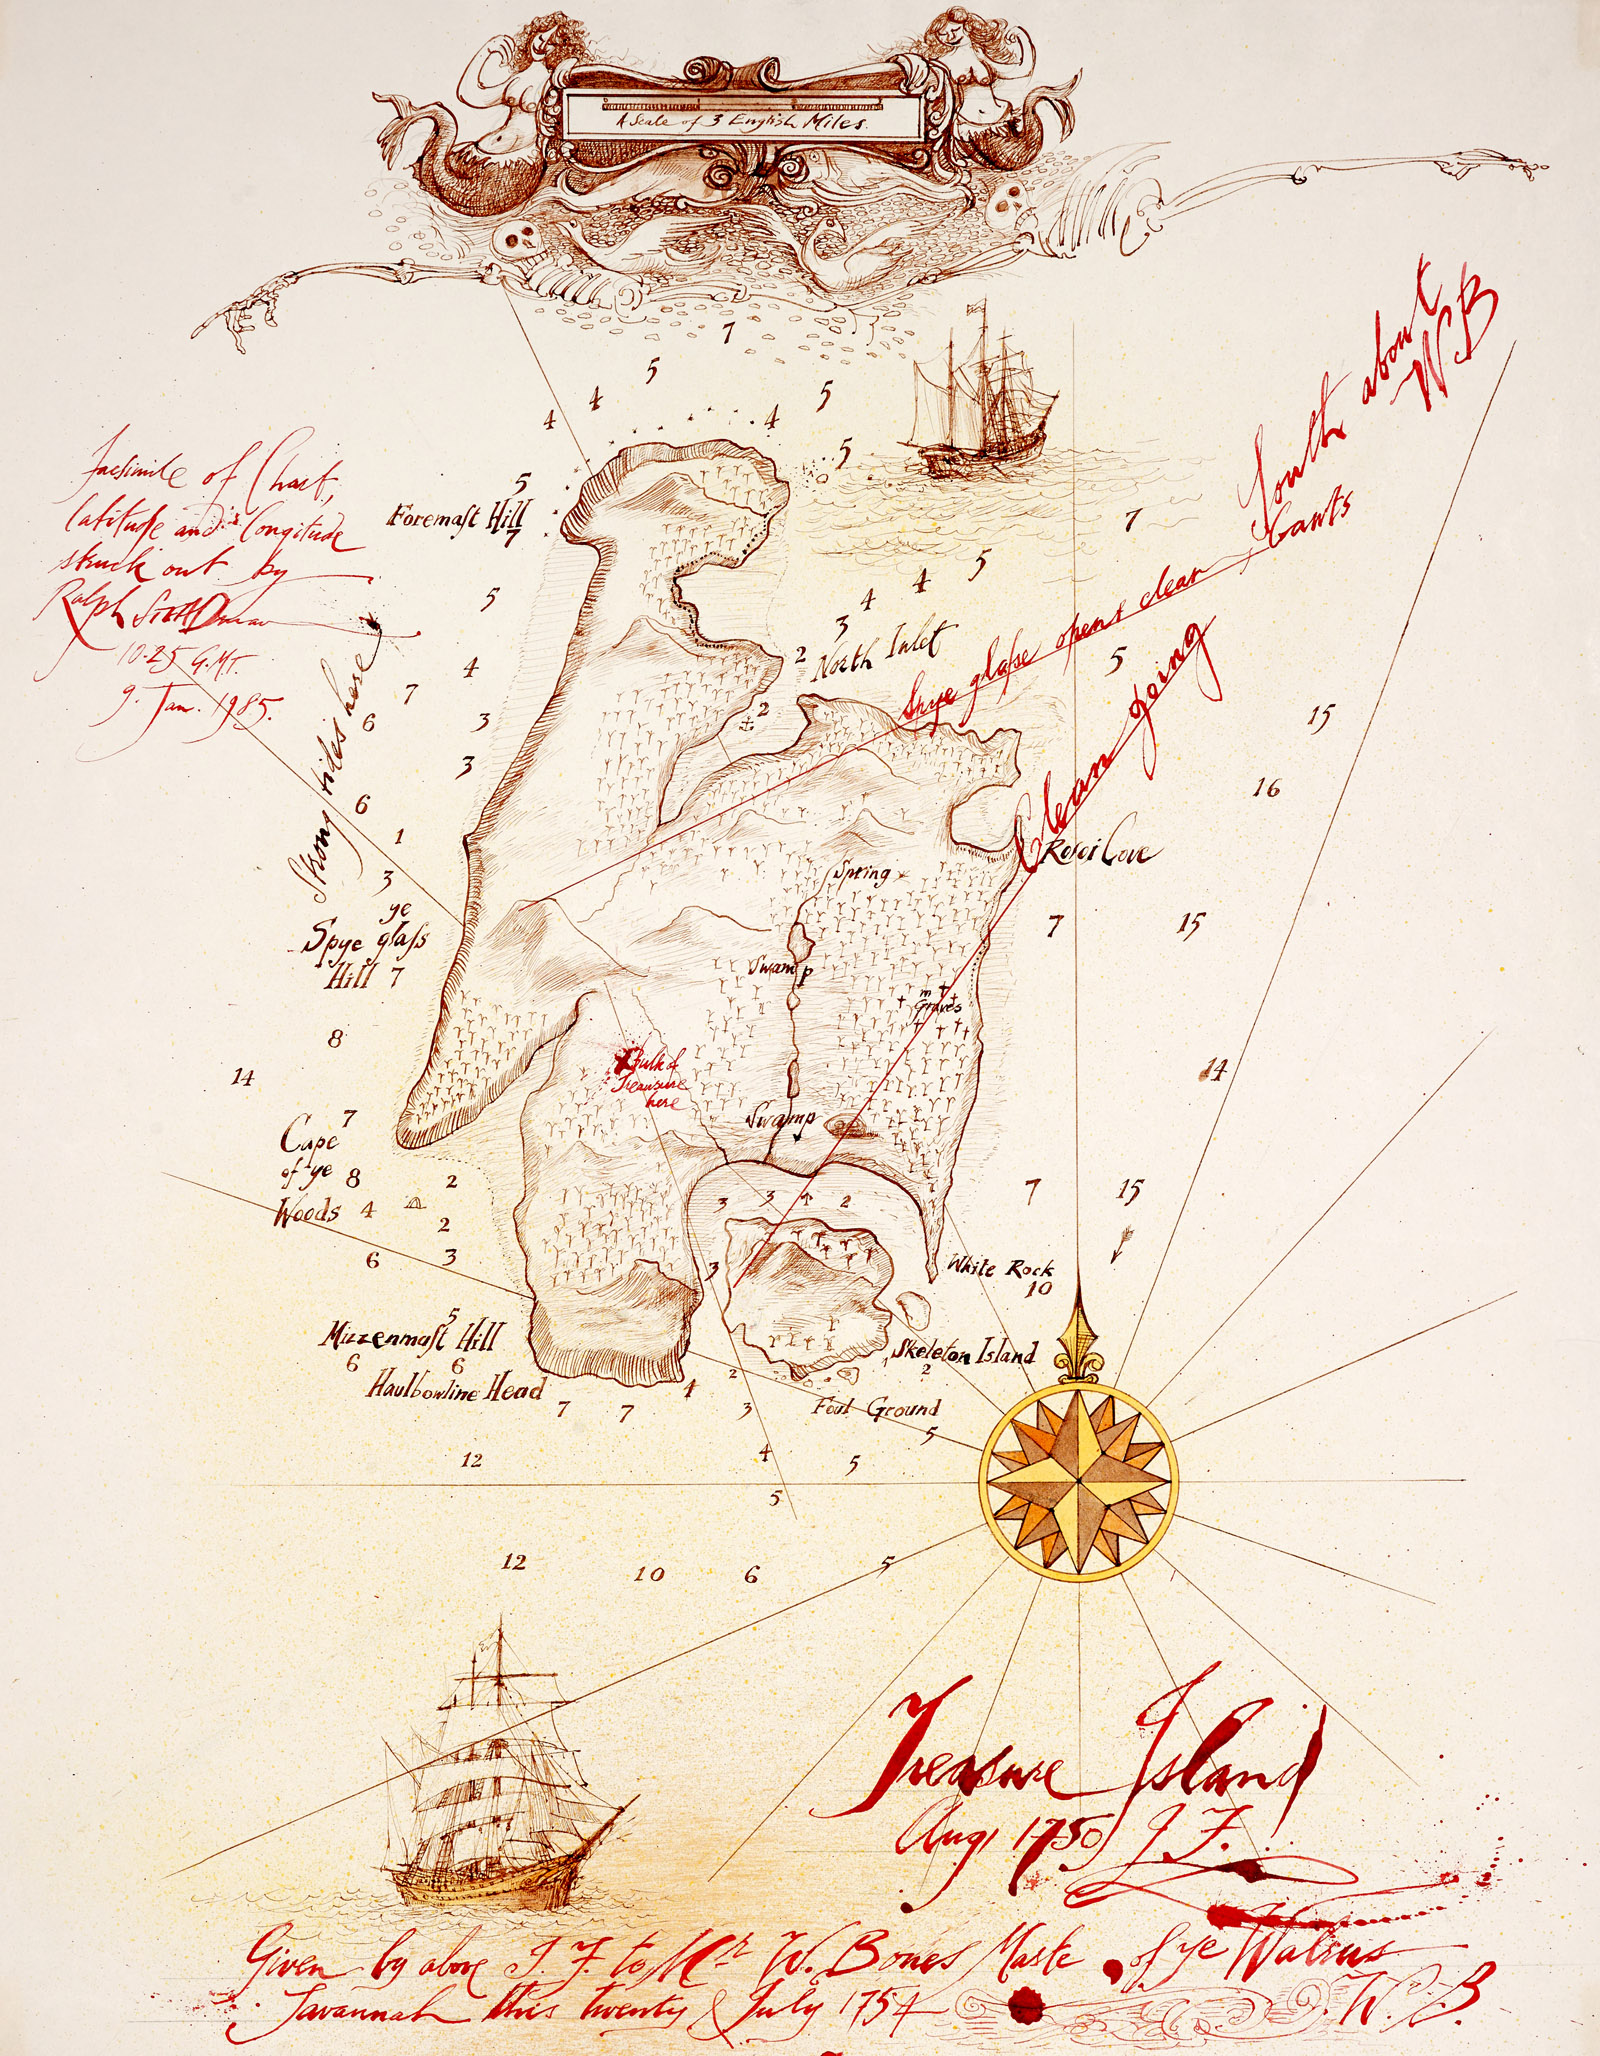 Ralph Steadman's illustrated version of Treasure Island 